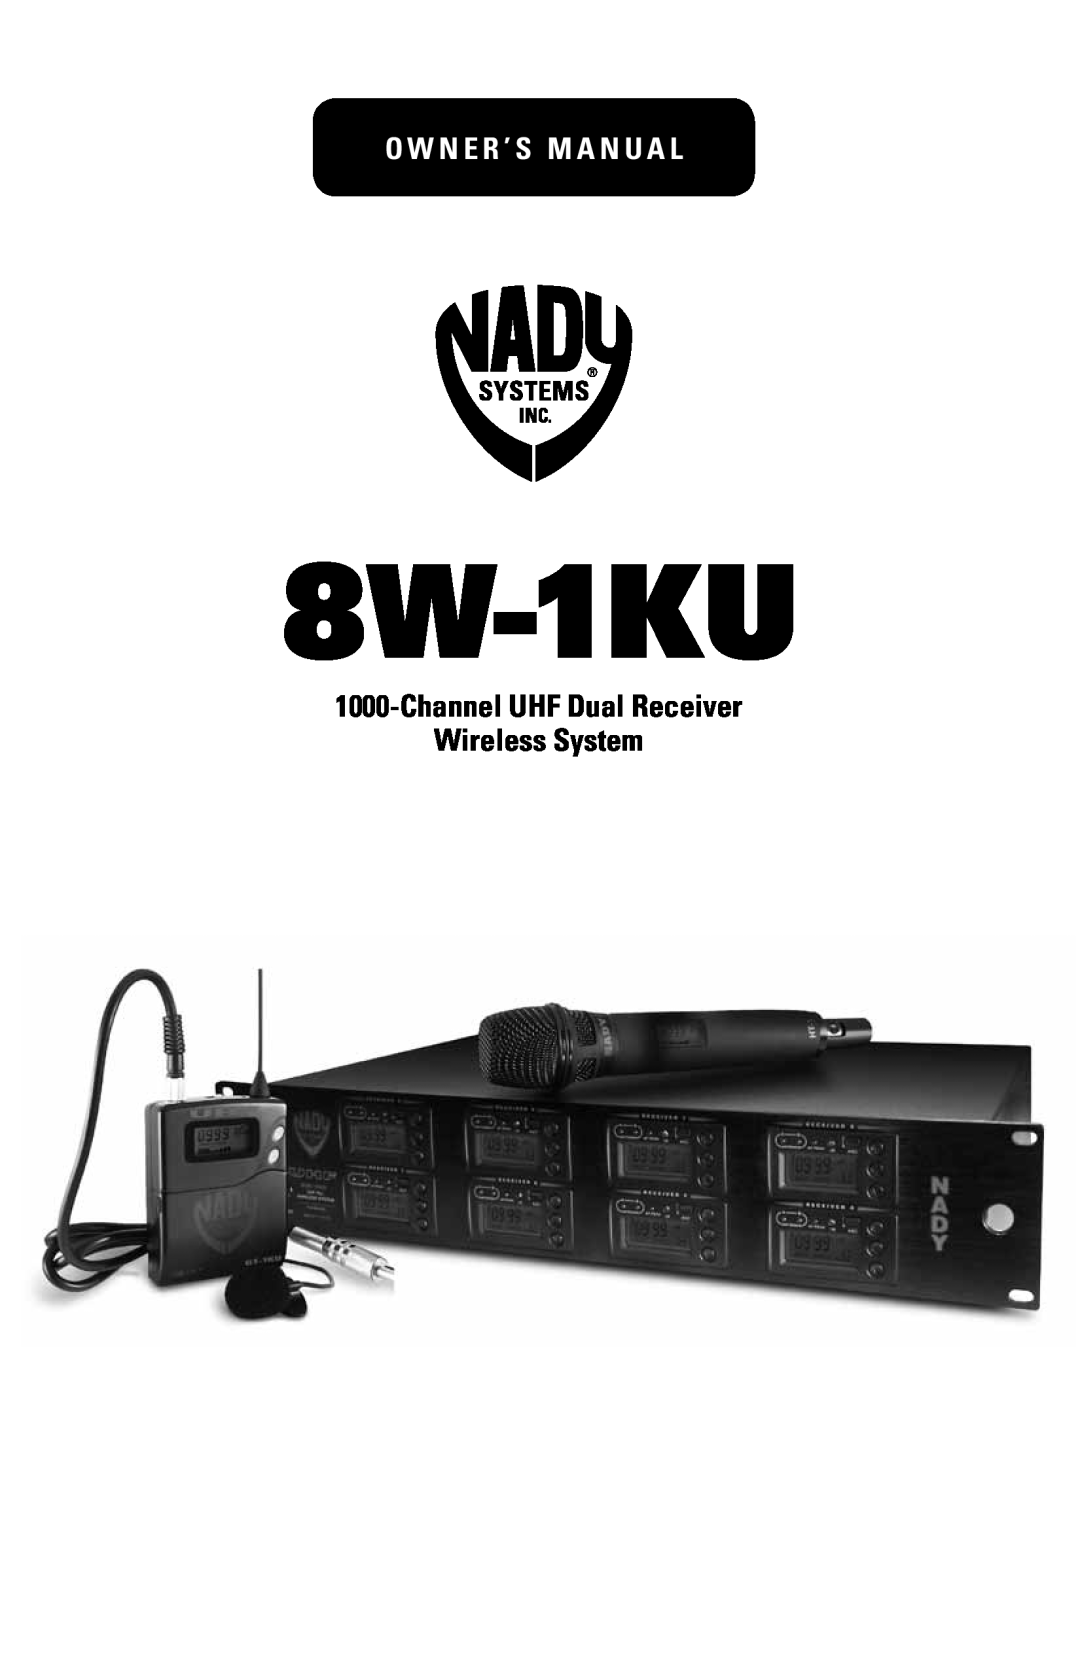 Nady Systems SW-1KU owner manual 8W-1KU, O w n e r ’ s M a n u a l, ChannelUHF Dual Receiver Wireless System 